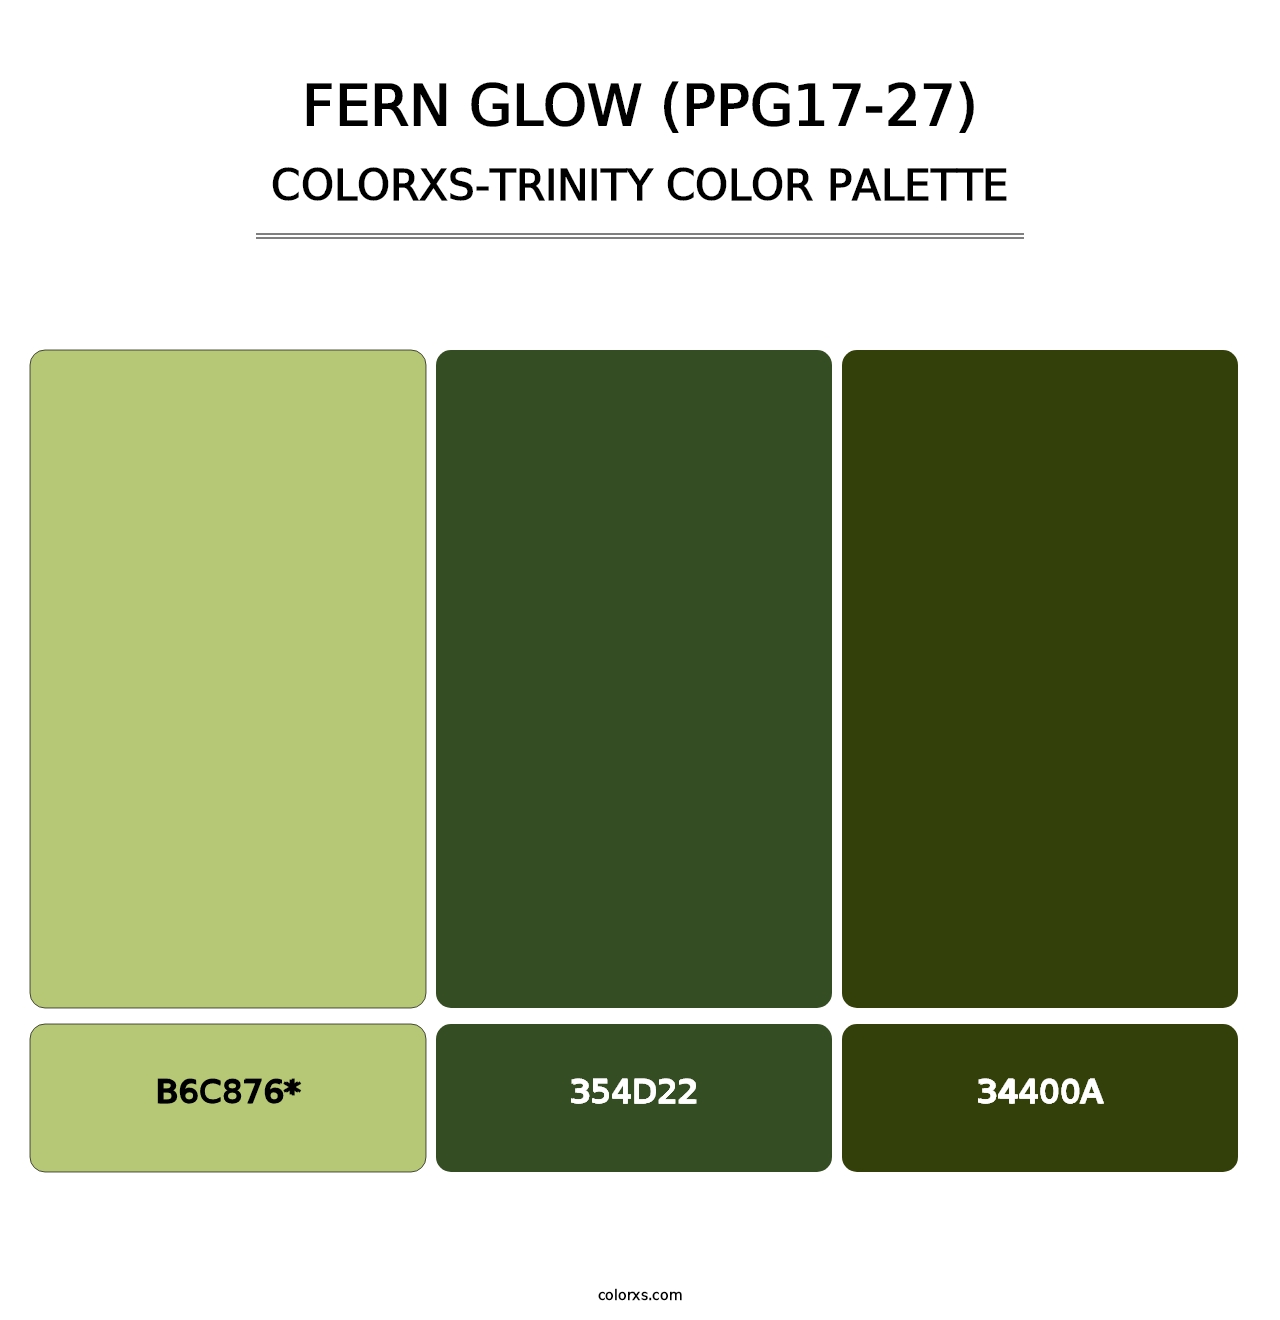 Fern Glow (PPG17-27) - Colorxs Trinity Palette